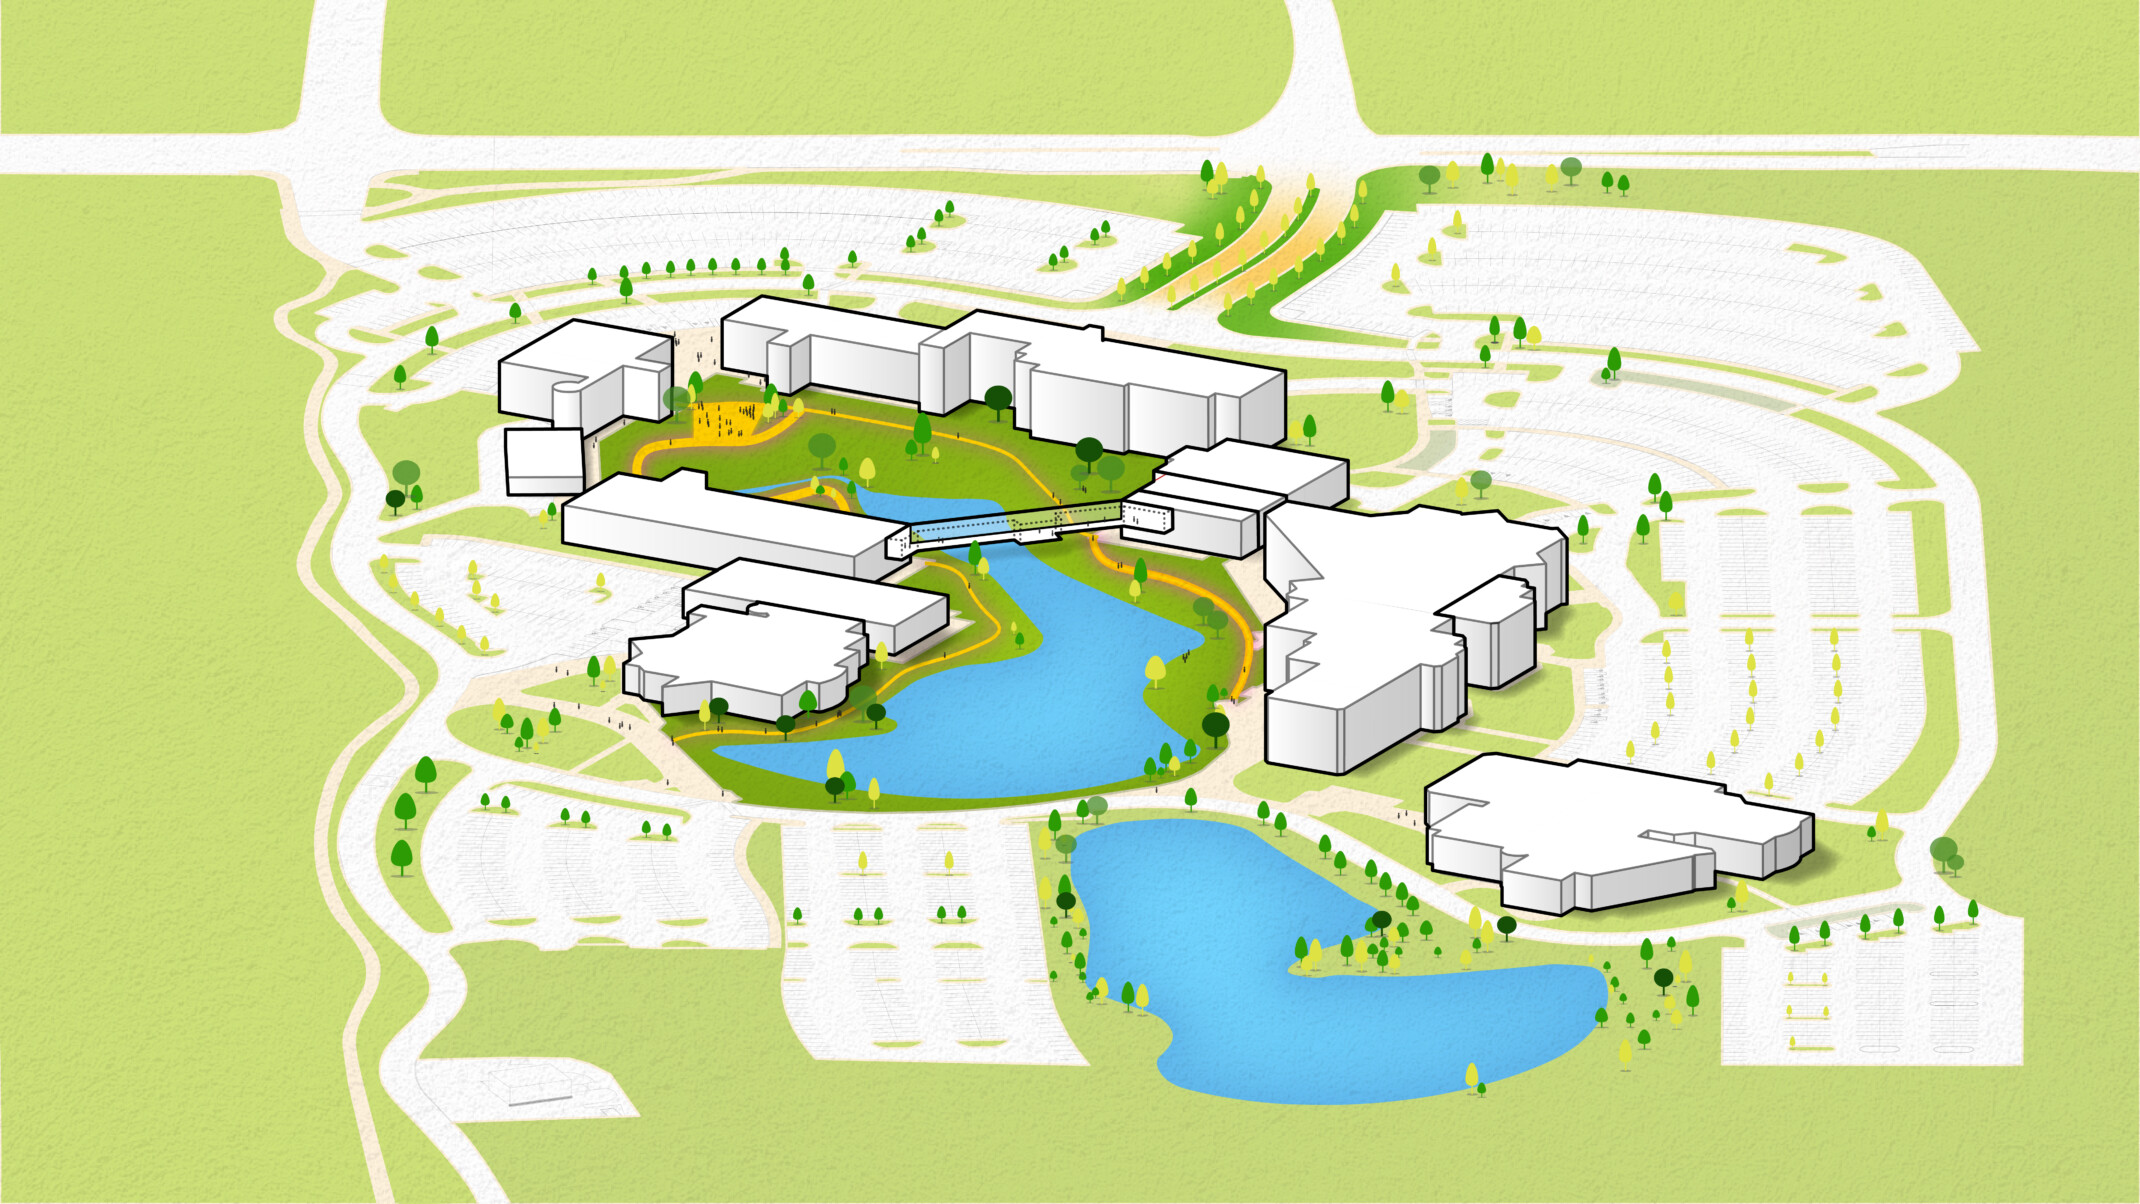 Facilities master plan rendering for Tulsa Community College campus